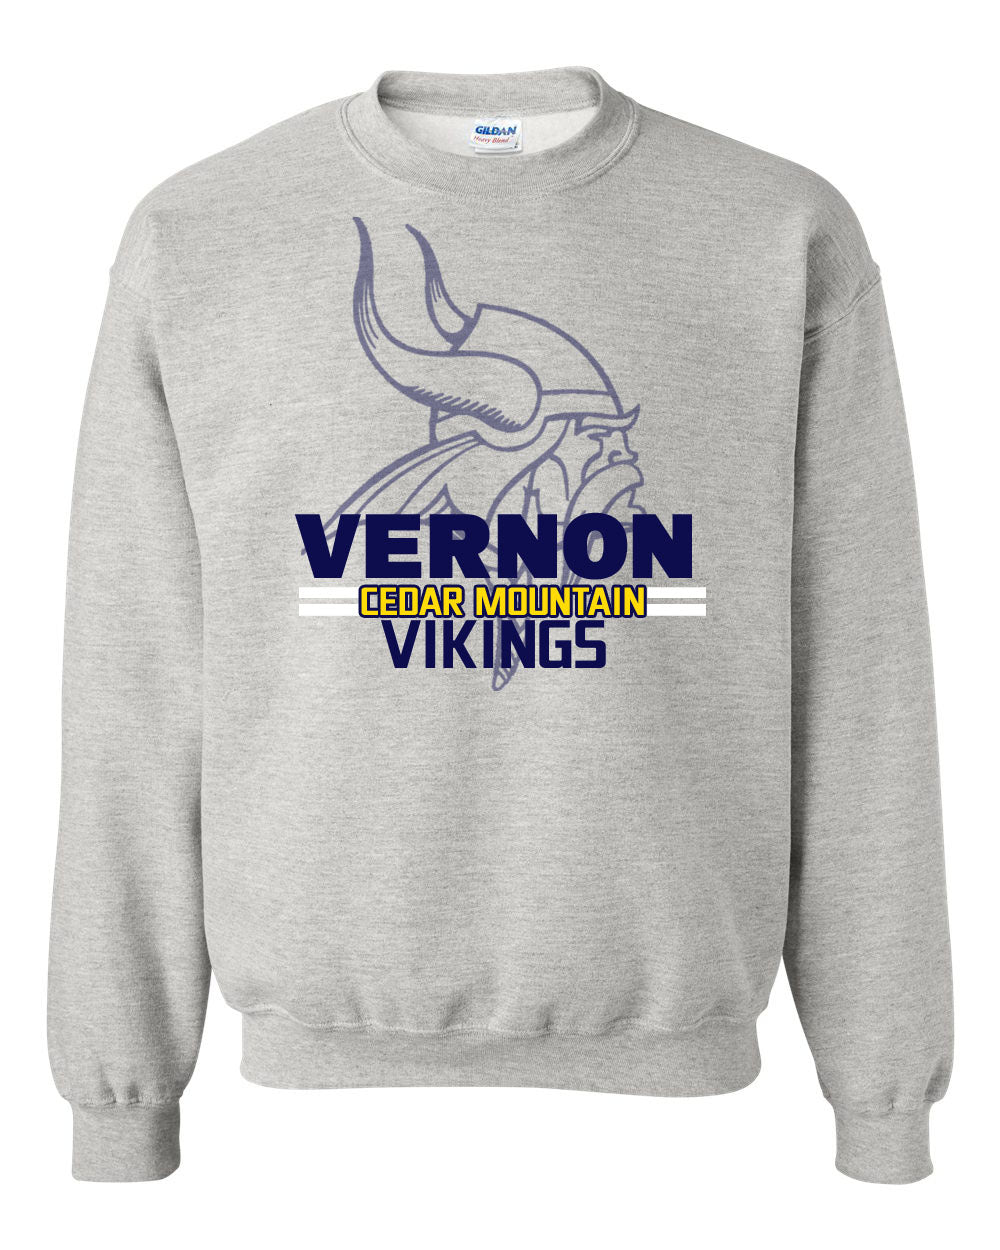 Vernon design 9 non hooded sweatshirt